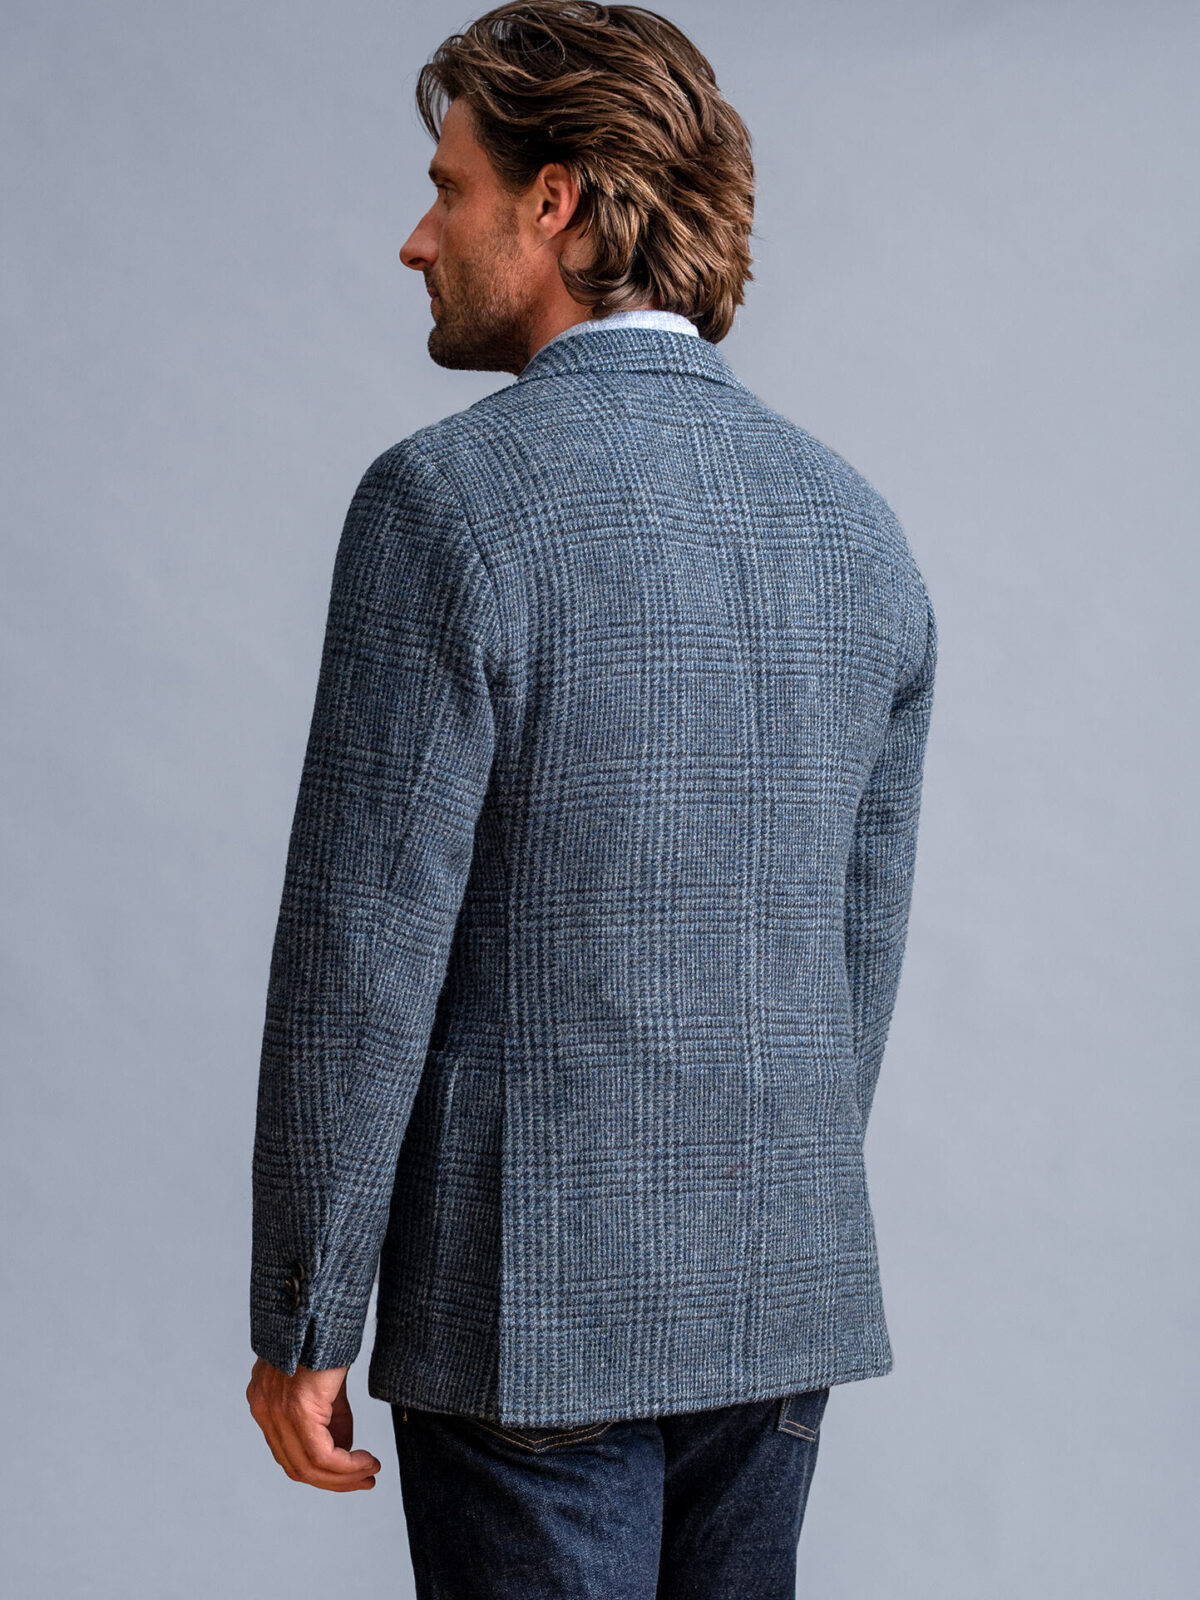 Waverly Blue Glen Plaid Shetland Wool Jacket - Custom Fit Tailored